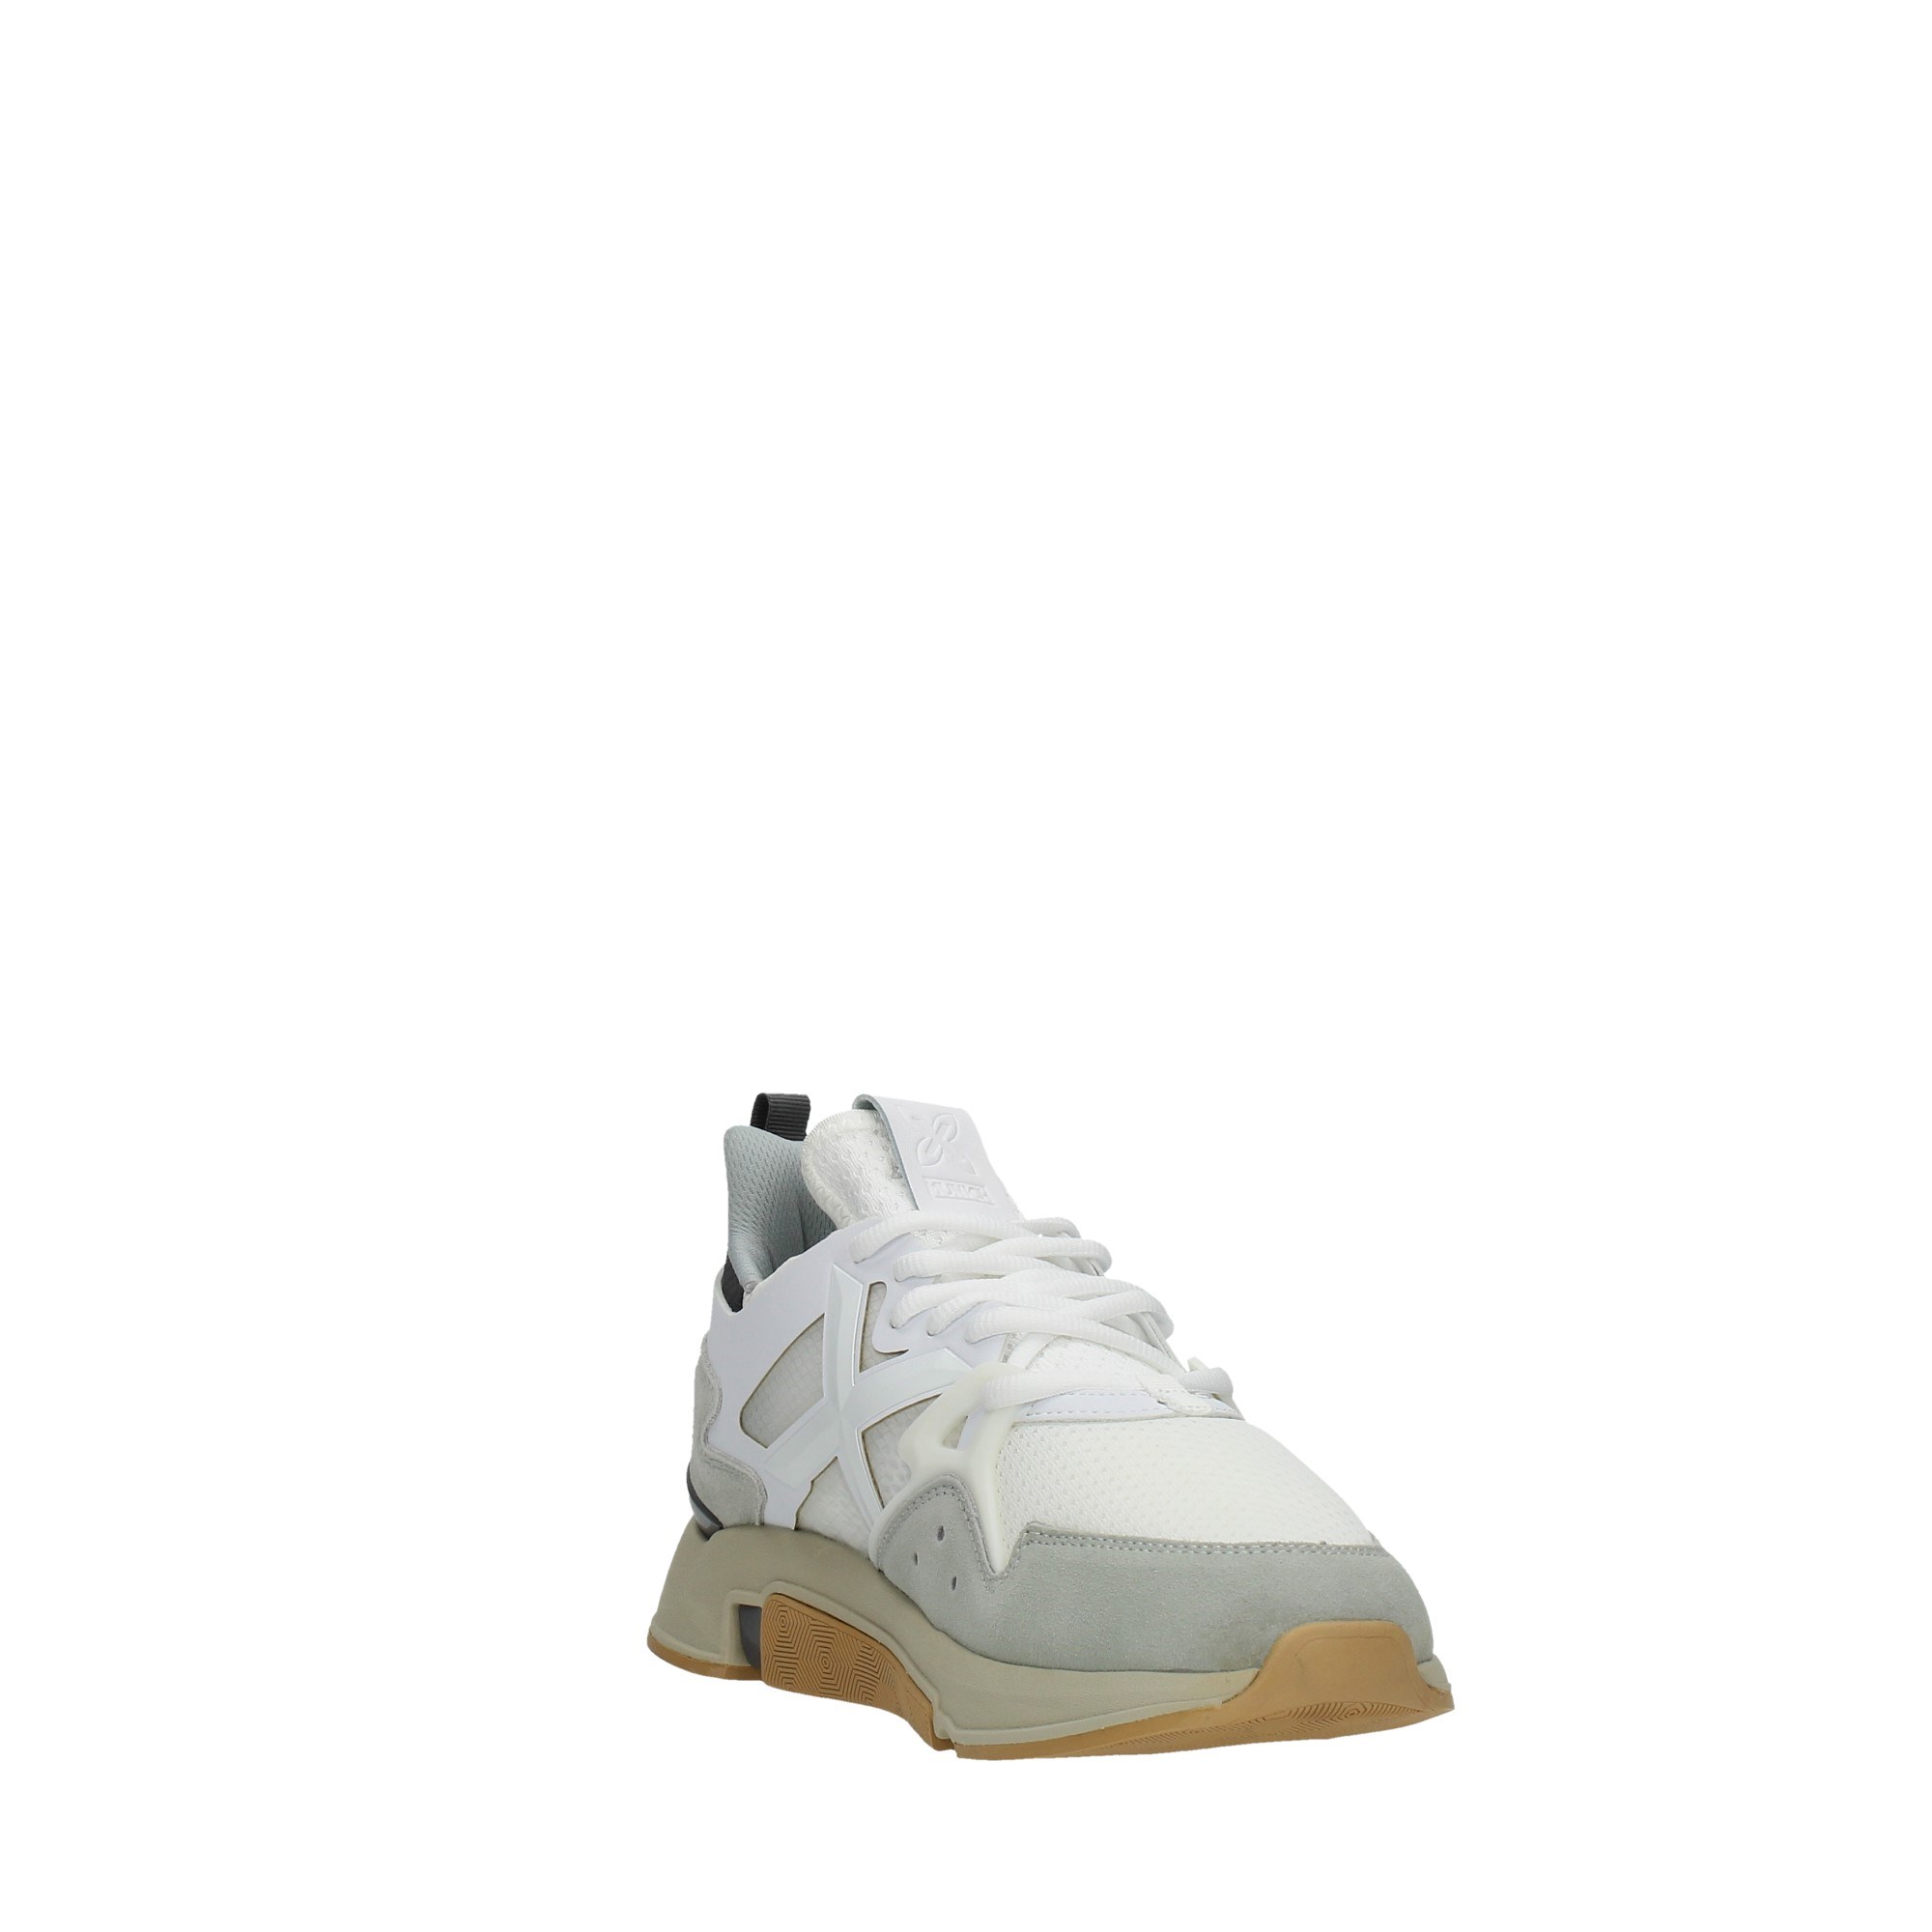 M U N I C H Scarpe Uomo Sneakers Bianco CLIK 64